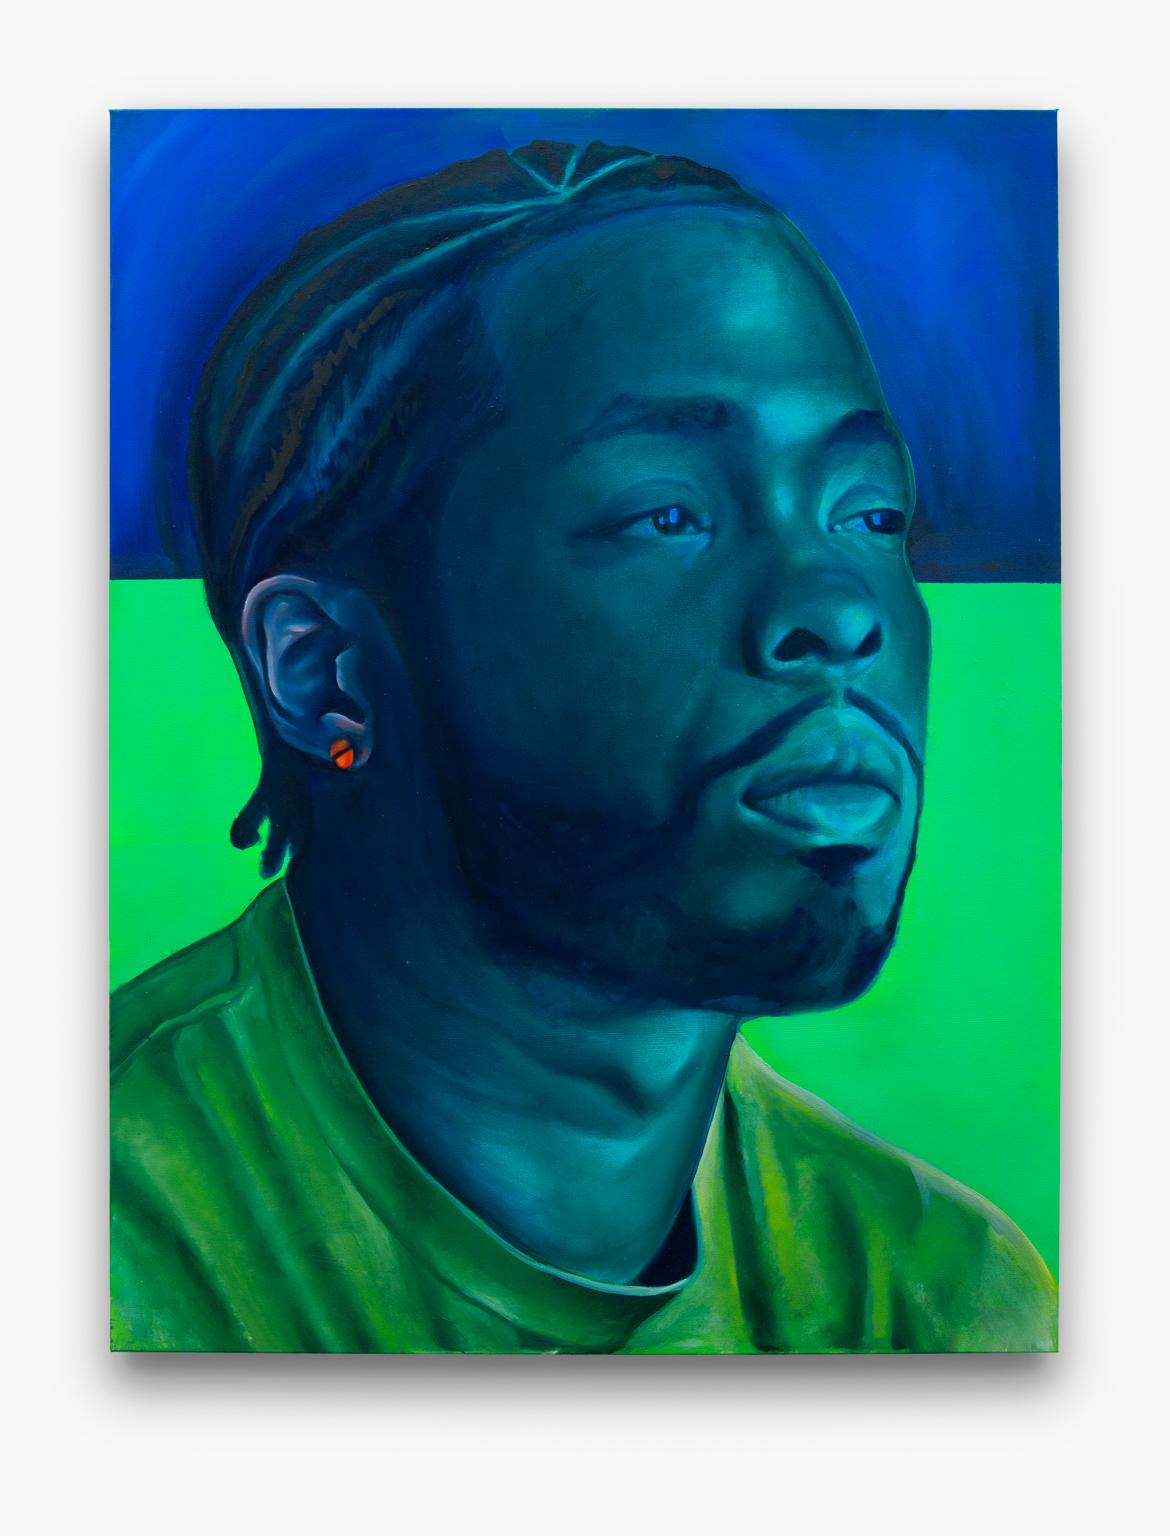 Ijania Cortez Portrait Painting - "Carlos II" Portrait, Blues, Greens, Acrylic, Psychological Drama